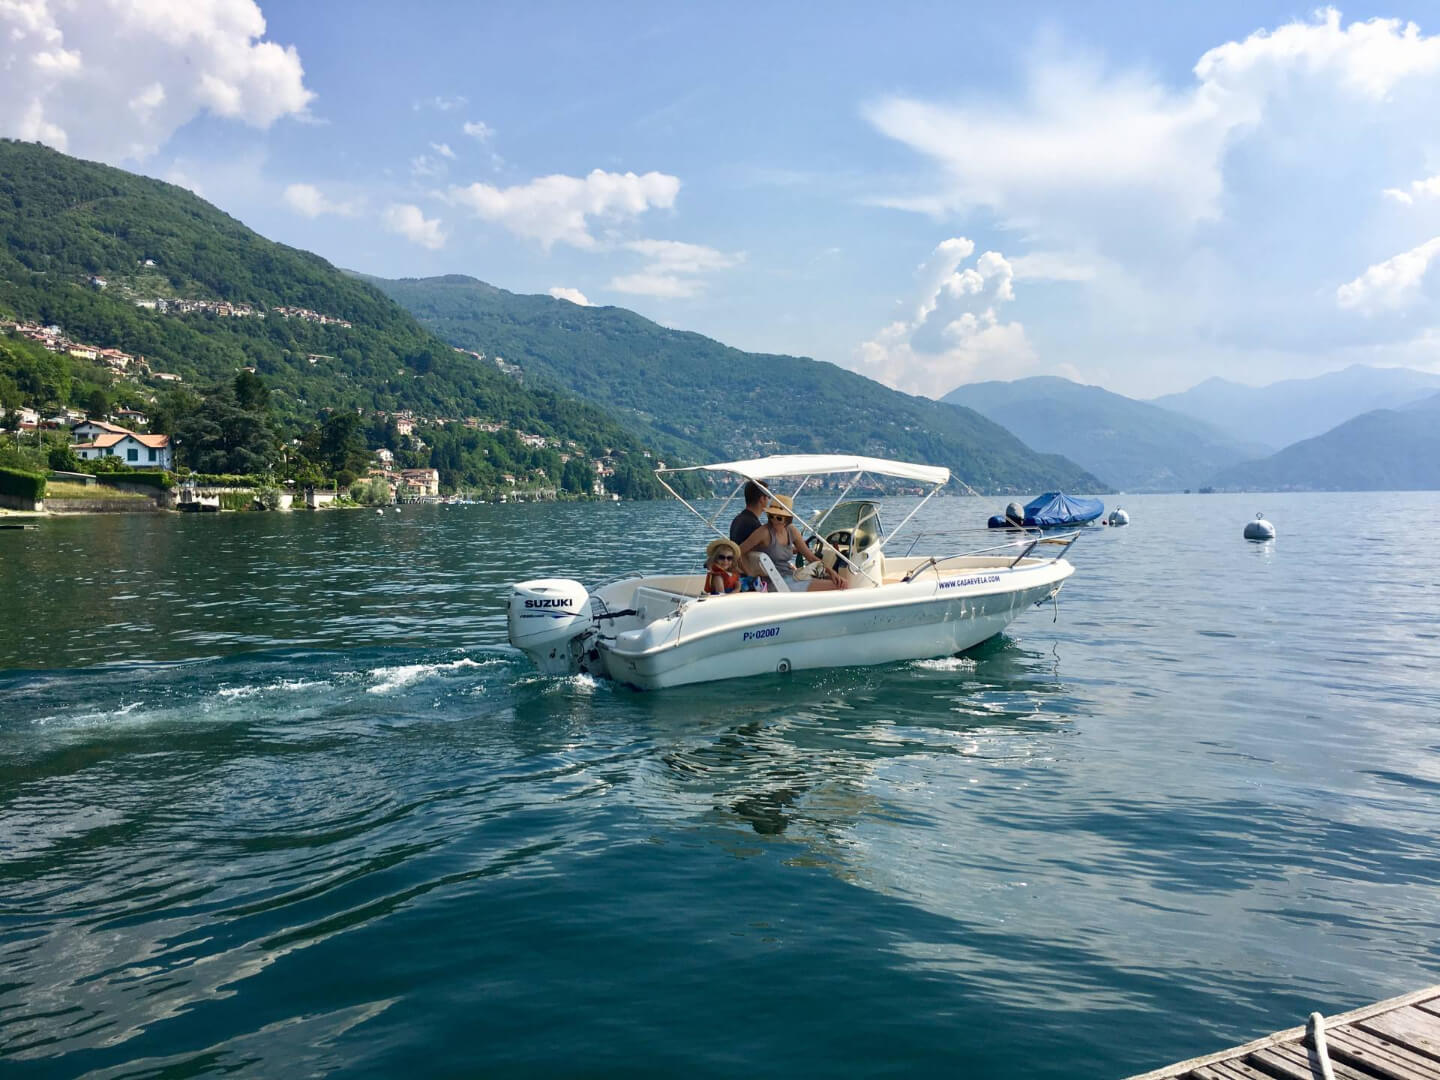 Boat Rental - Explore Lake Maggiore on Your Own